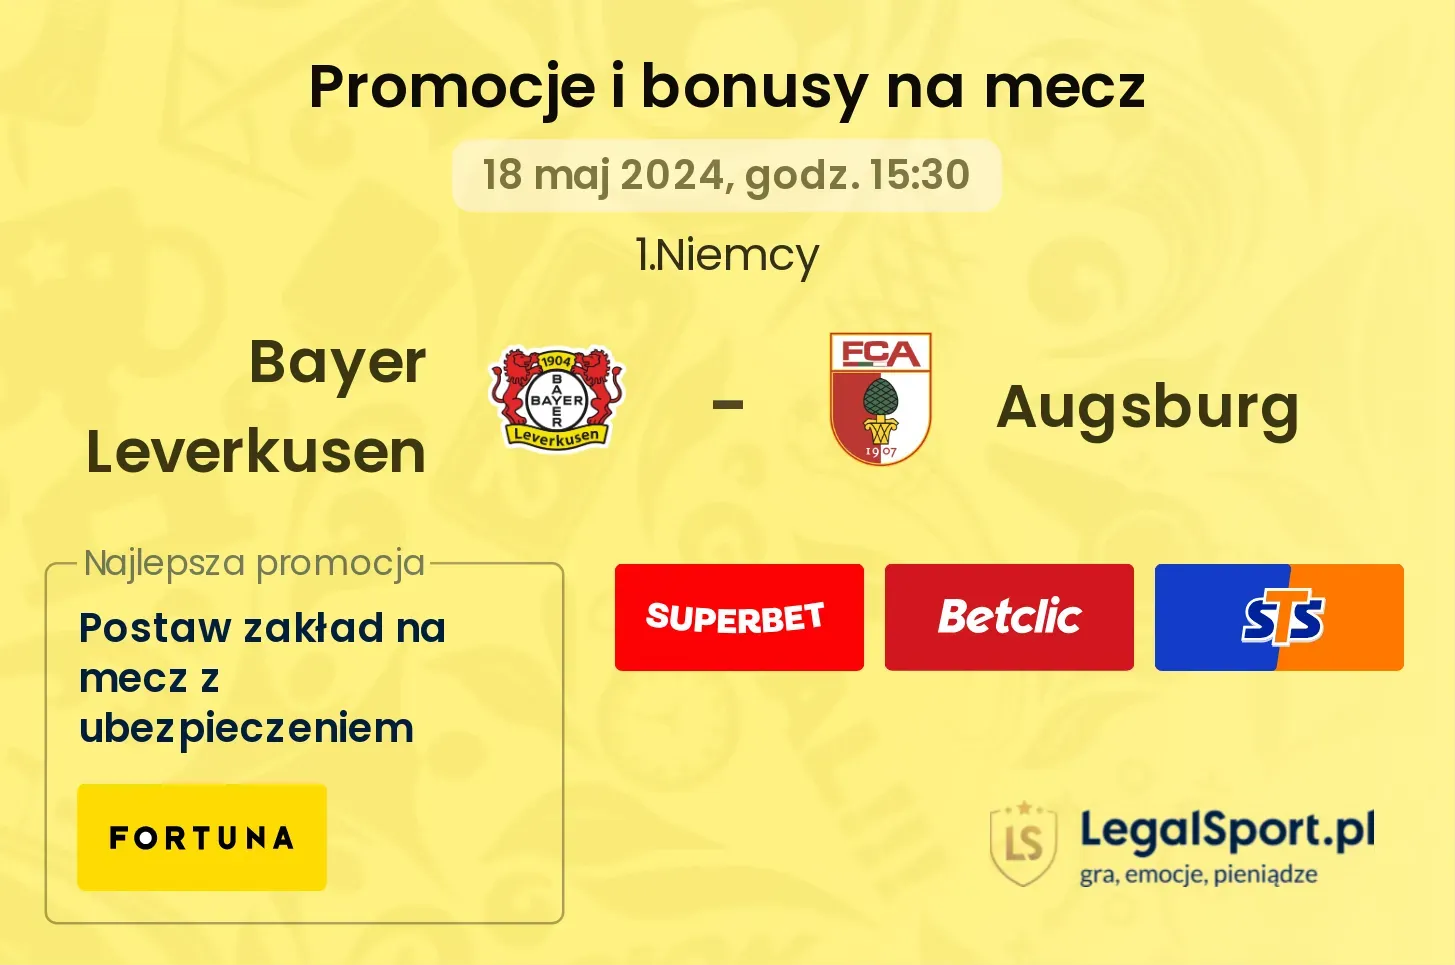 Bayer Leverkusen - Augsburg bonusy i promocje (18.05, 15:30)